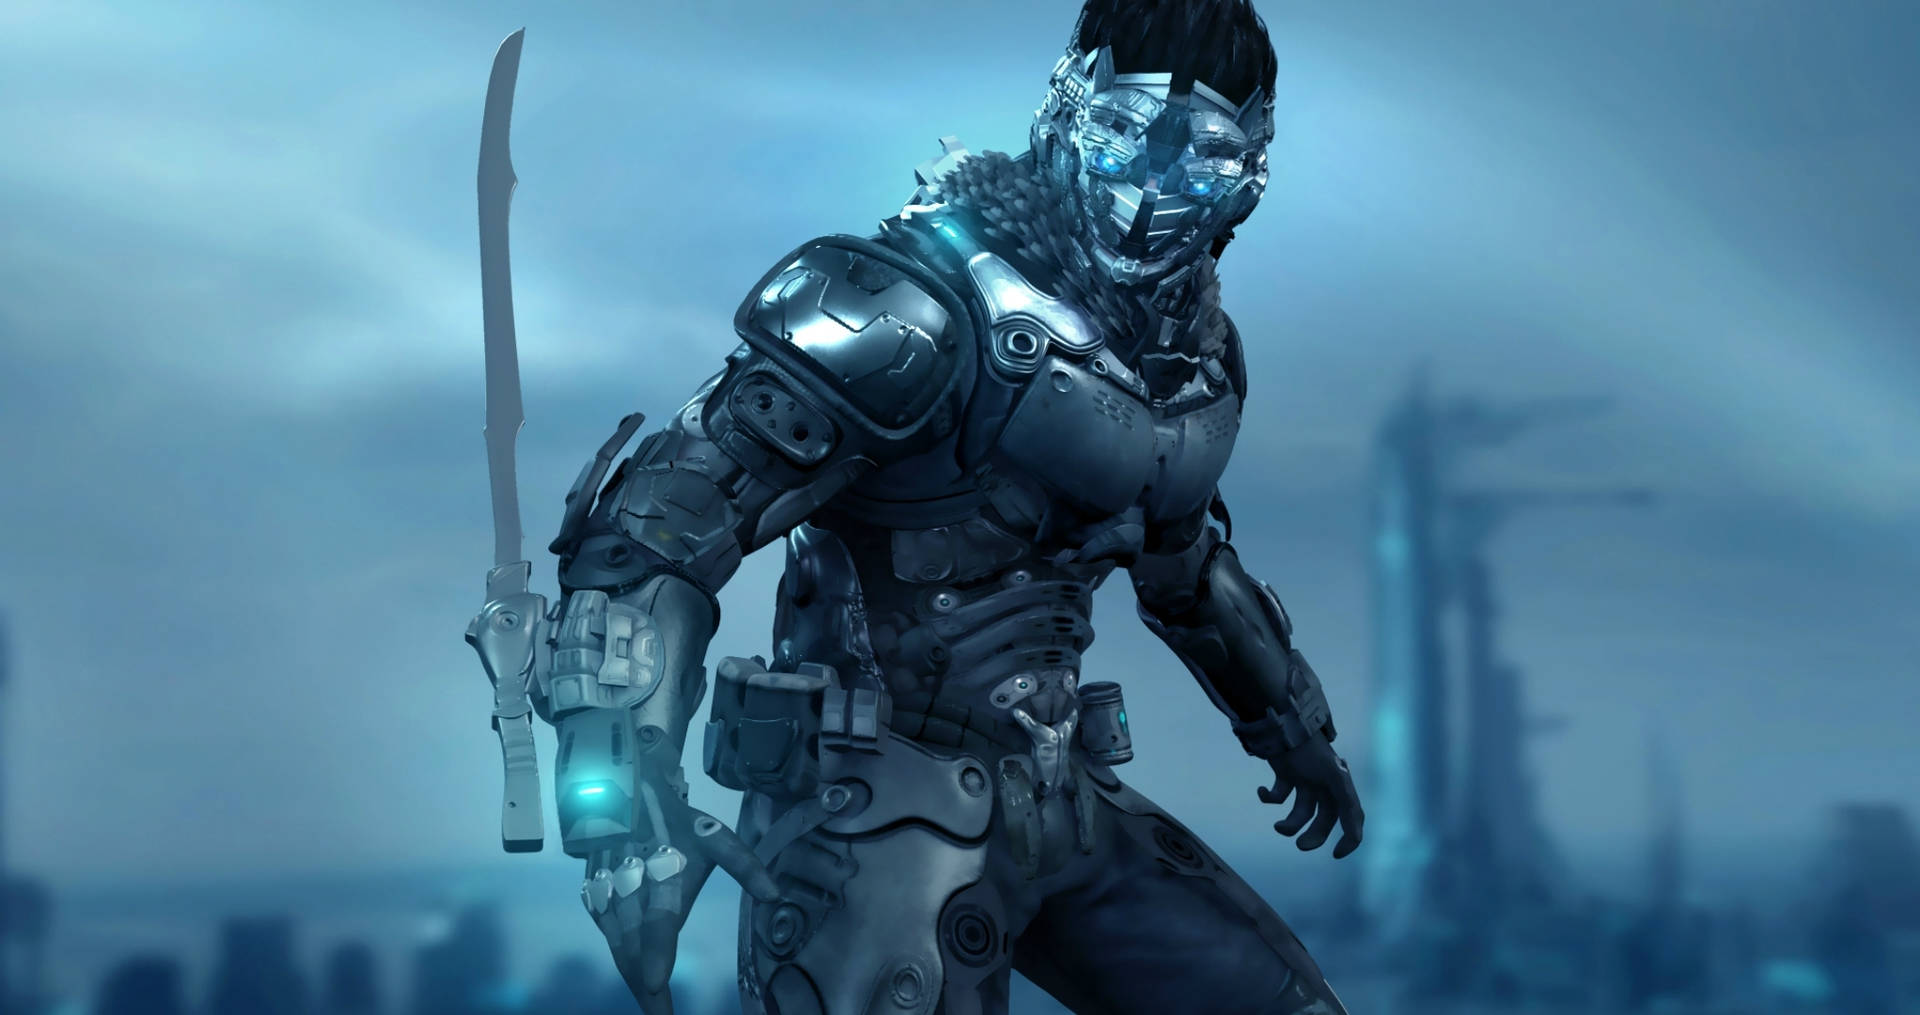 "Armored warrior wielding a sword in a cyberpunk world" Wallpaper